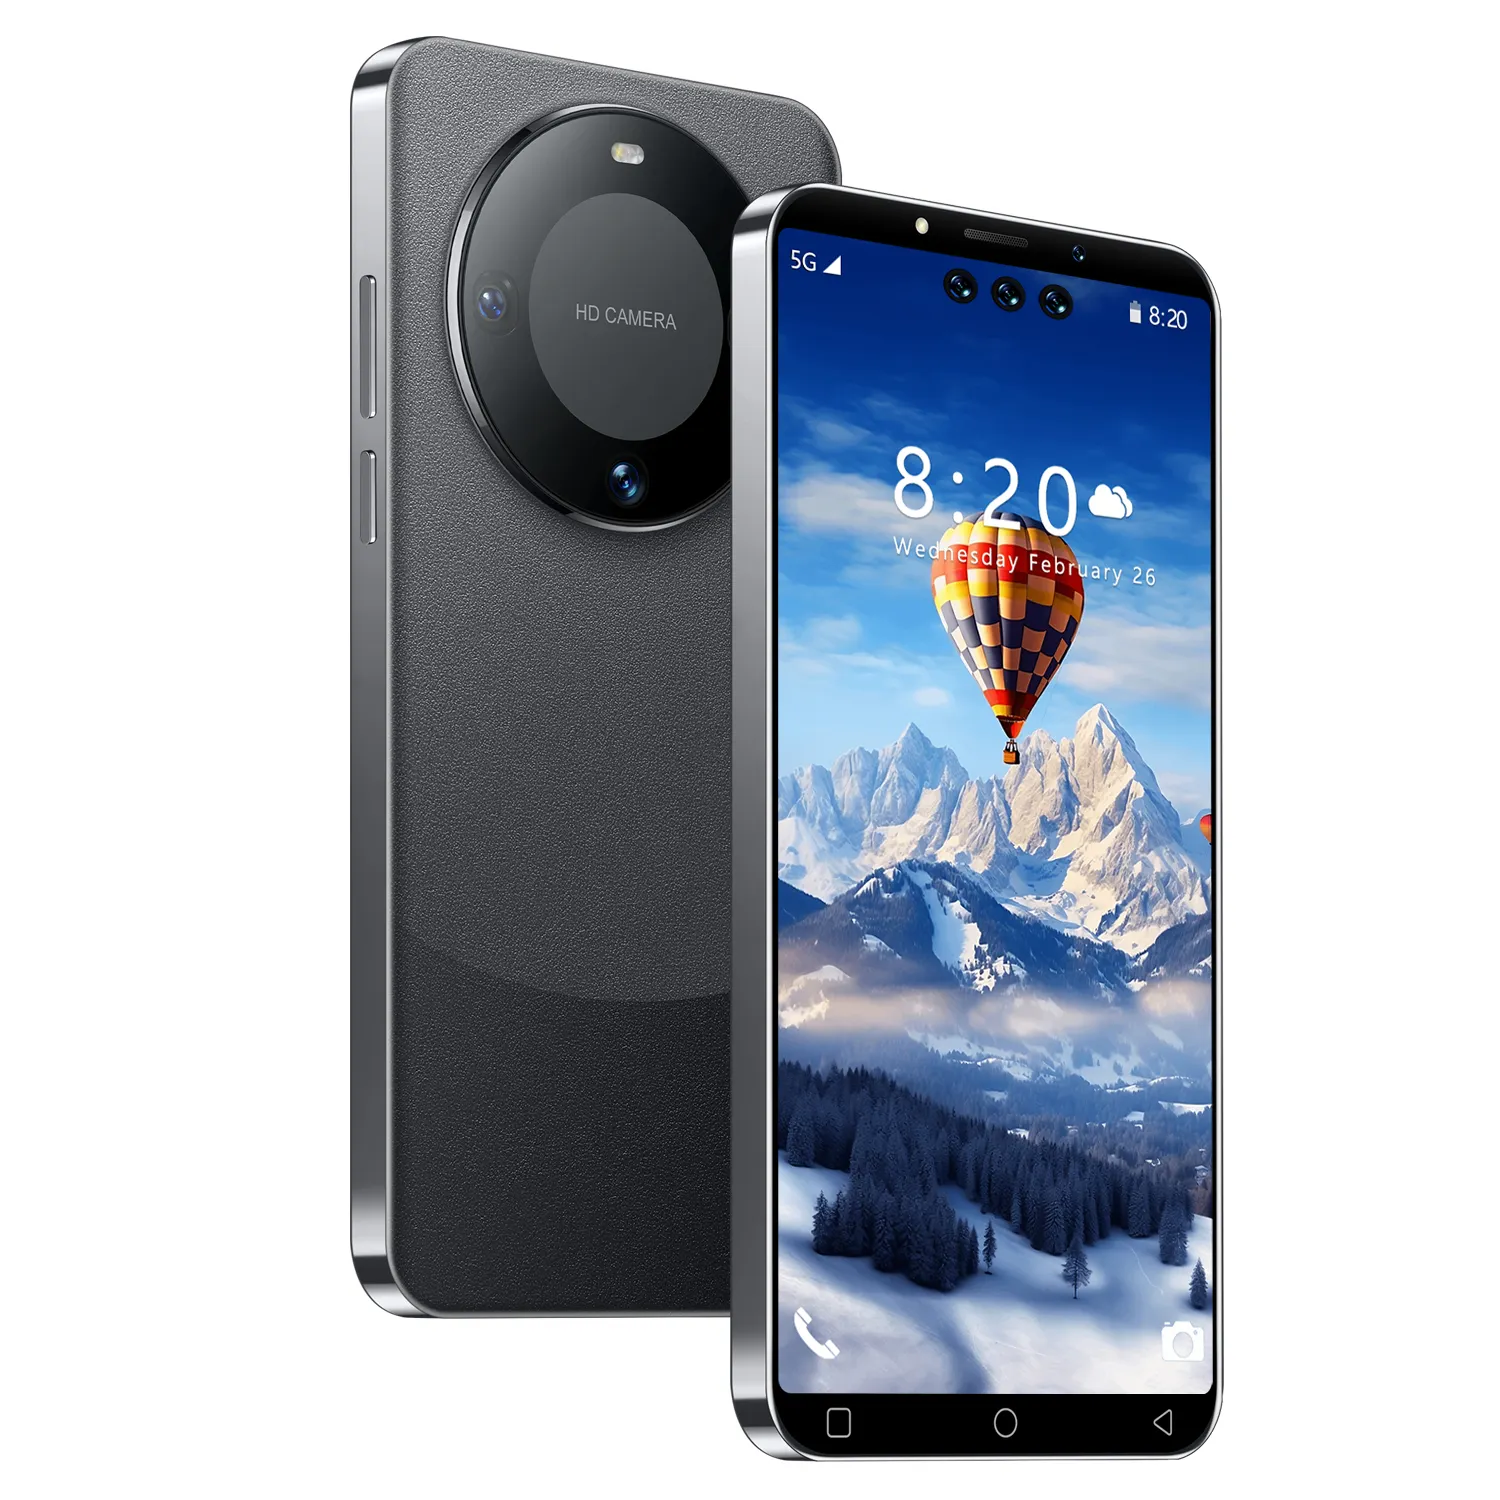 Schlussverkauf Mate 60 Pro günstige Smartphones 5.0 Zoll HD 1 GB + 8 GB Android 8.1 Handy 2 MP + 2 MP 2000 mAh Face Unlock Handy